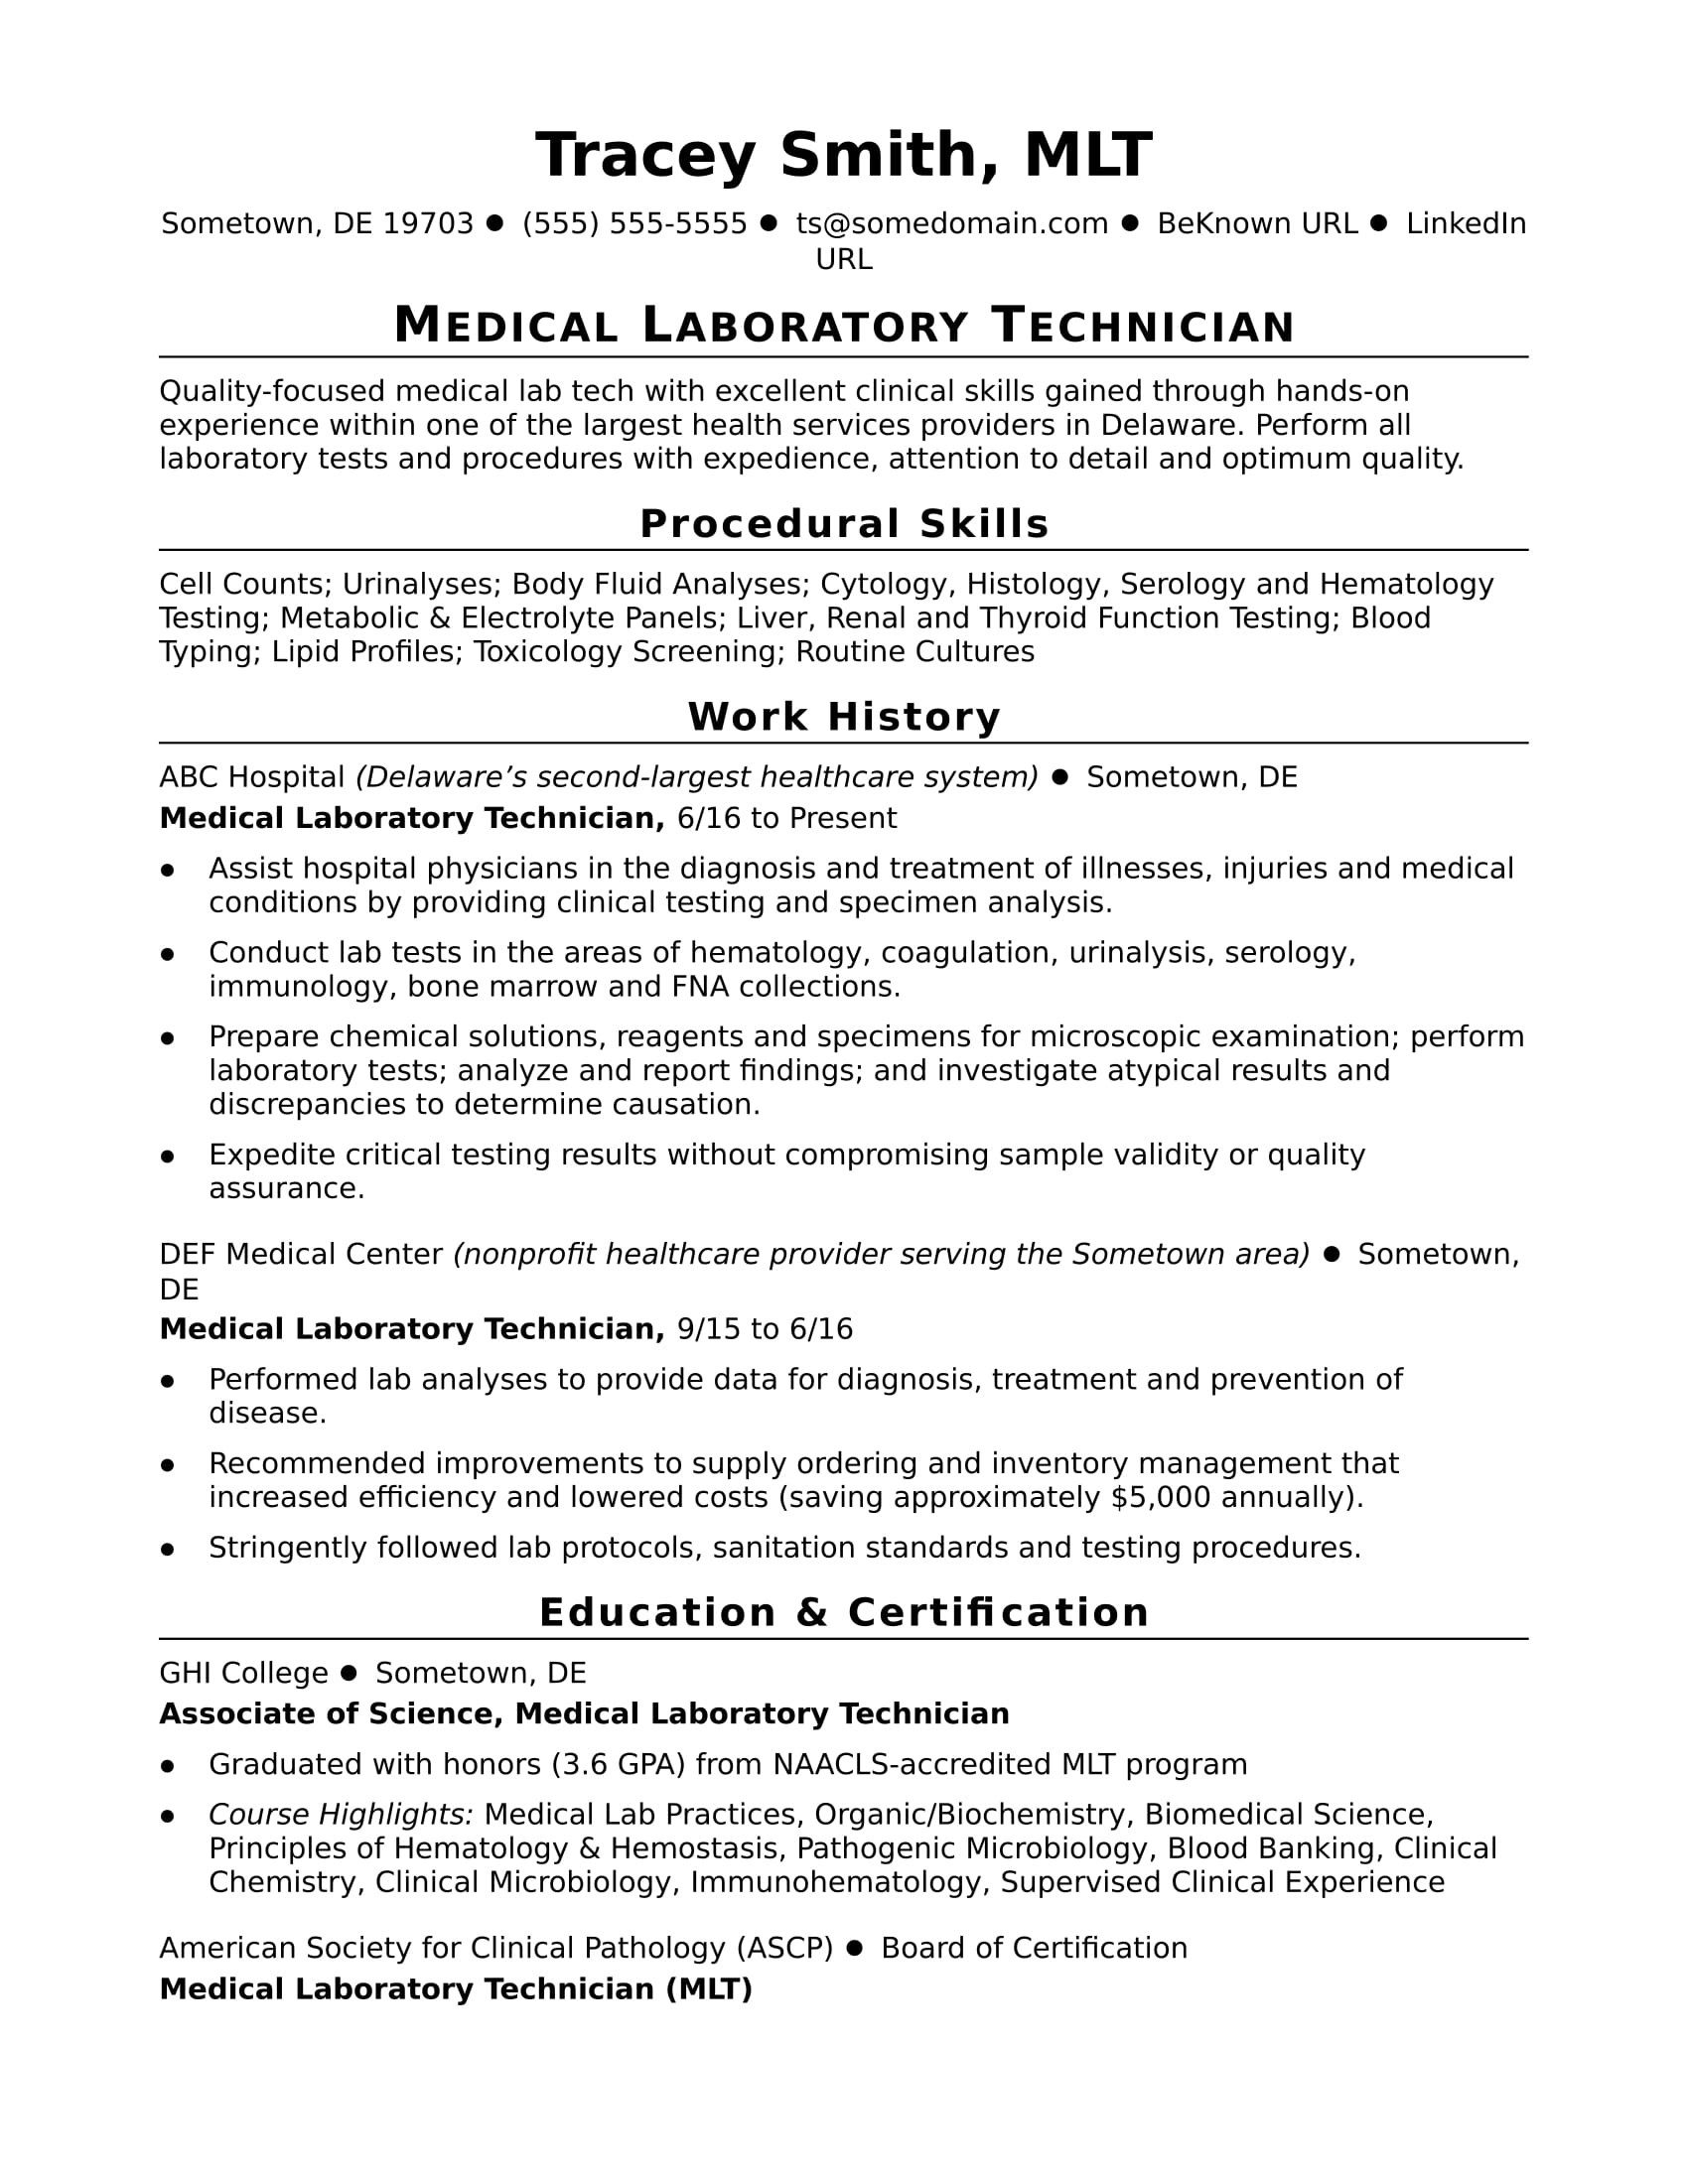 Resume Samples for Bone Marrow Lab Sample Lab Technician Resume Monster.com